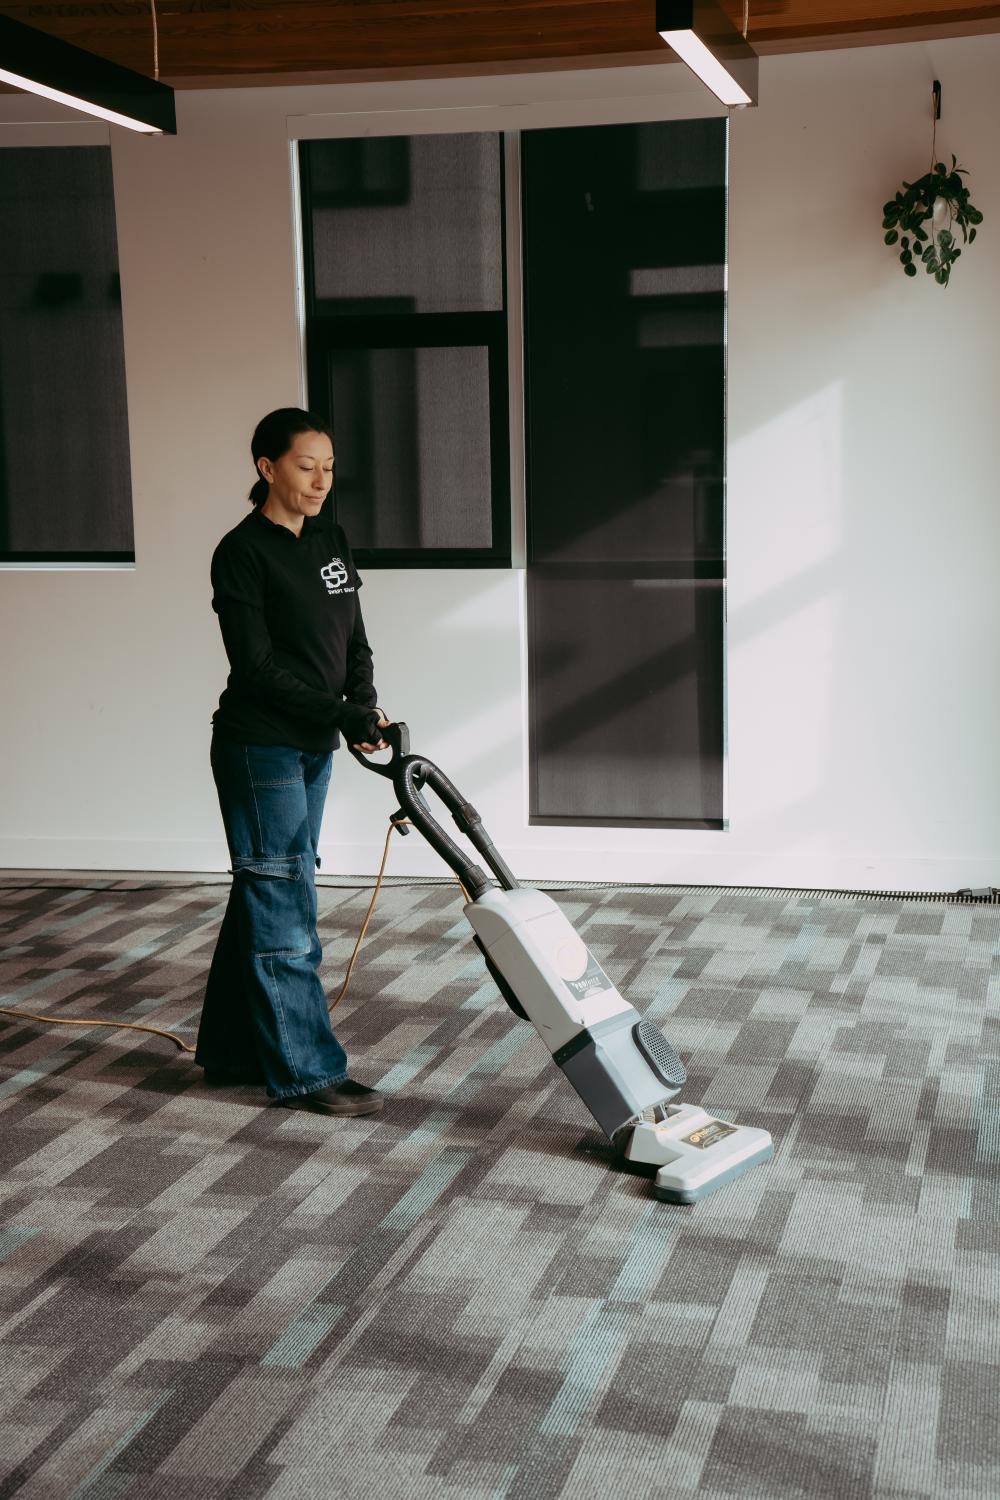  Woman vacuuming office floor